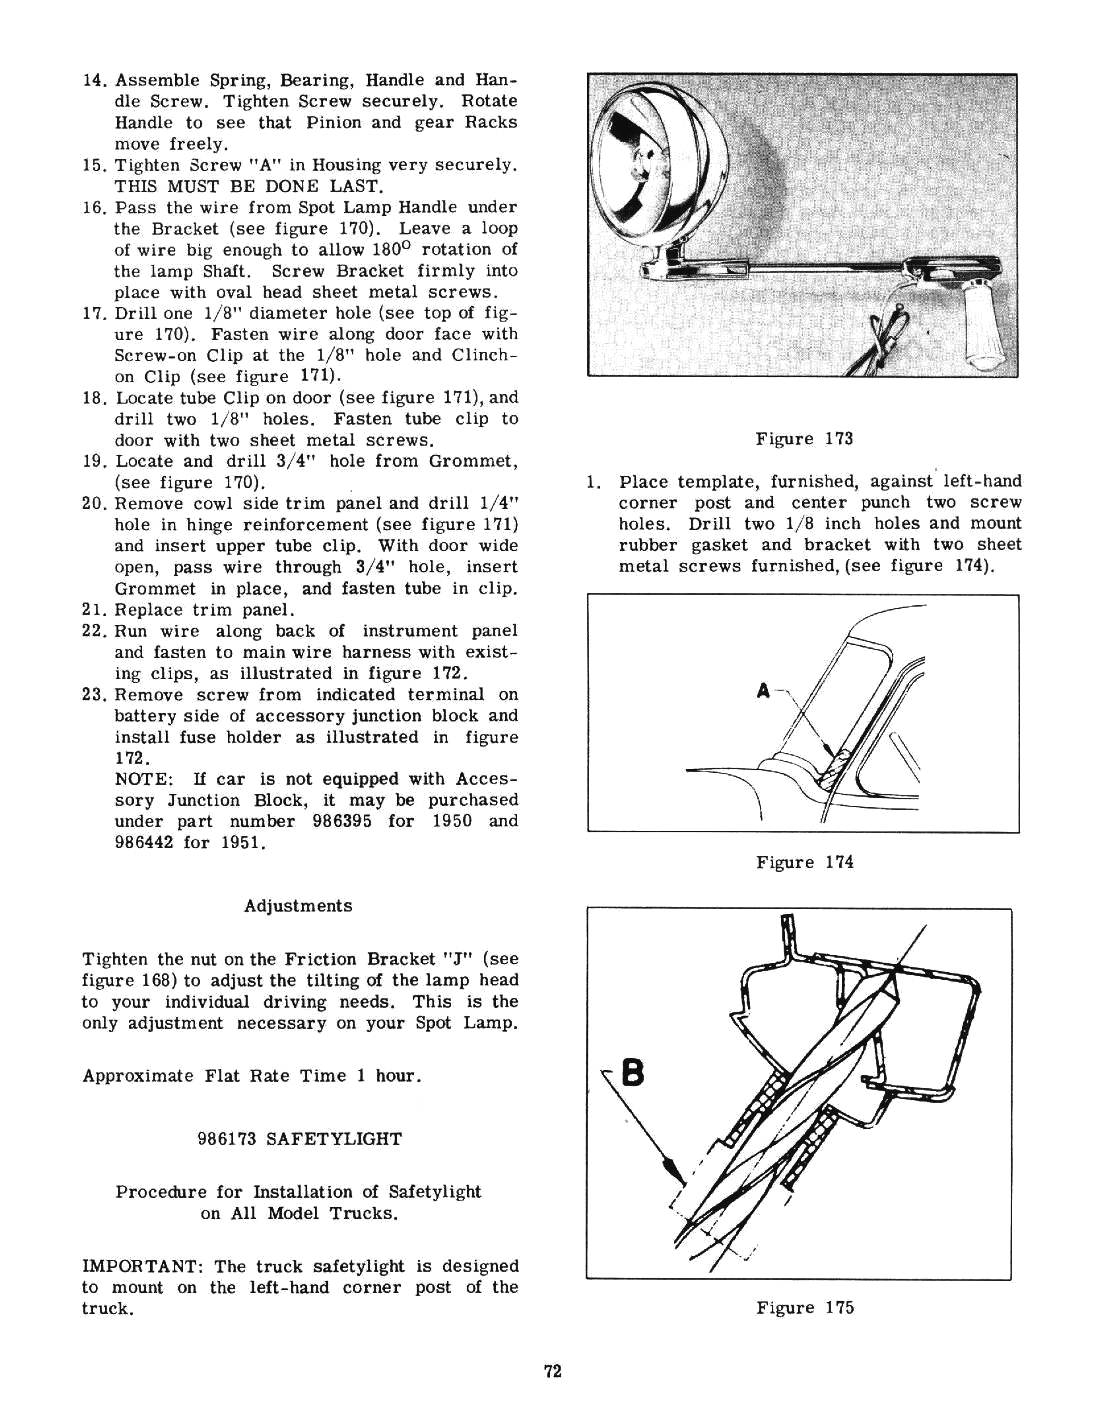 1951_Chevrolet_Acc_Manual-72